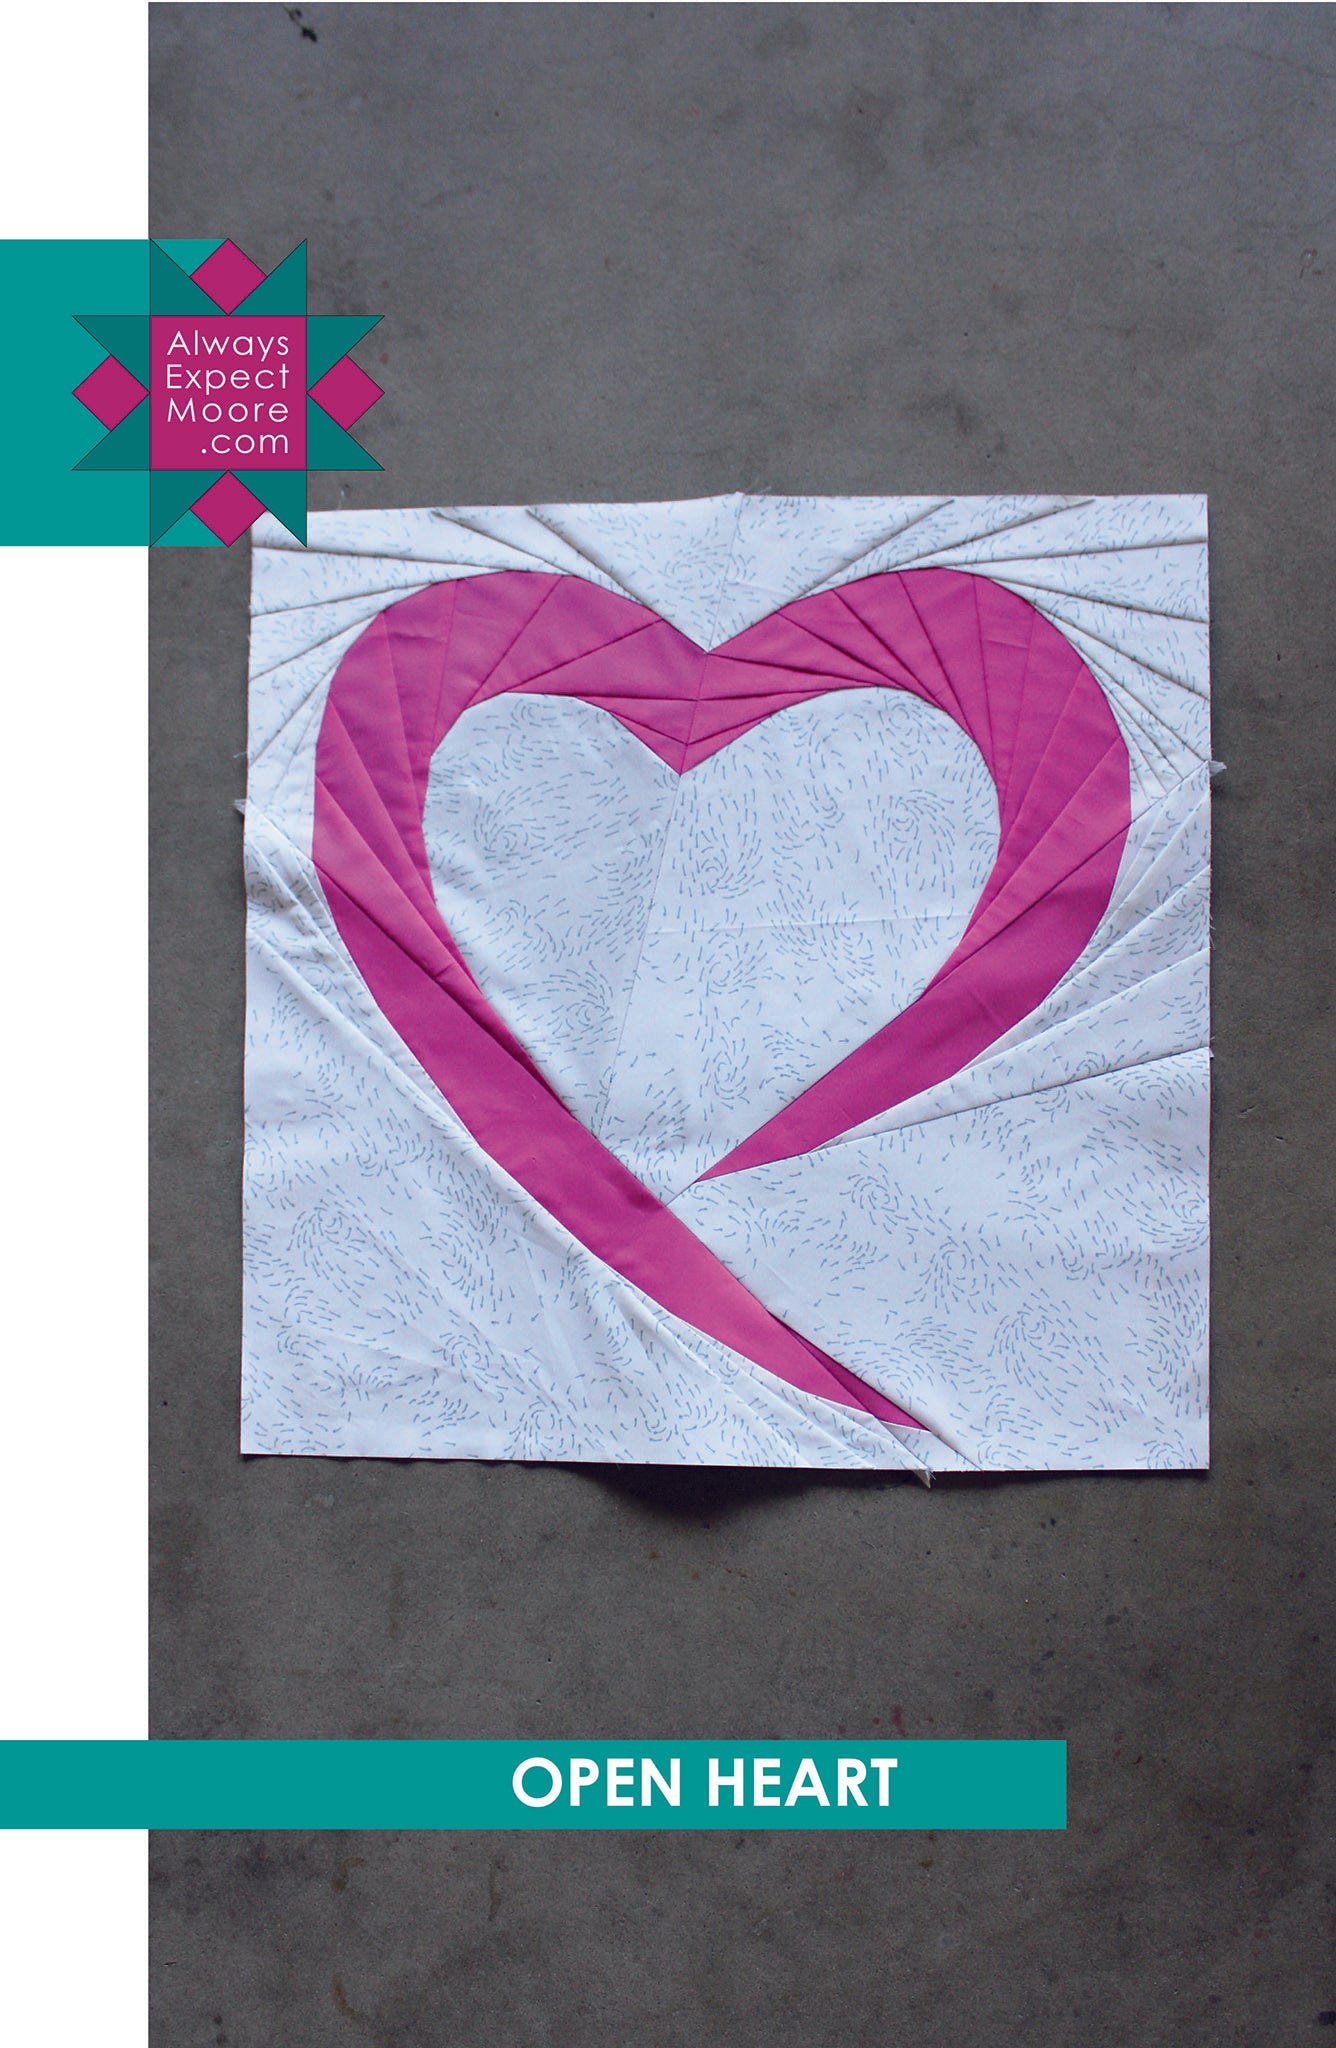 Open Heart - Foundation Pieced Heart (Digital Download)